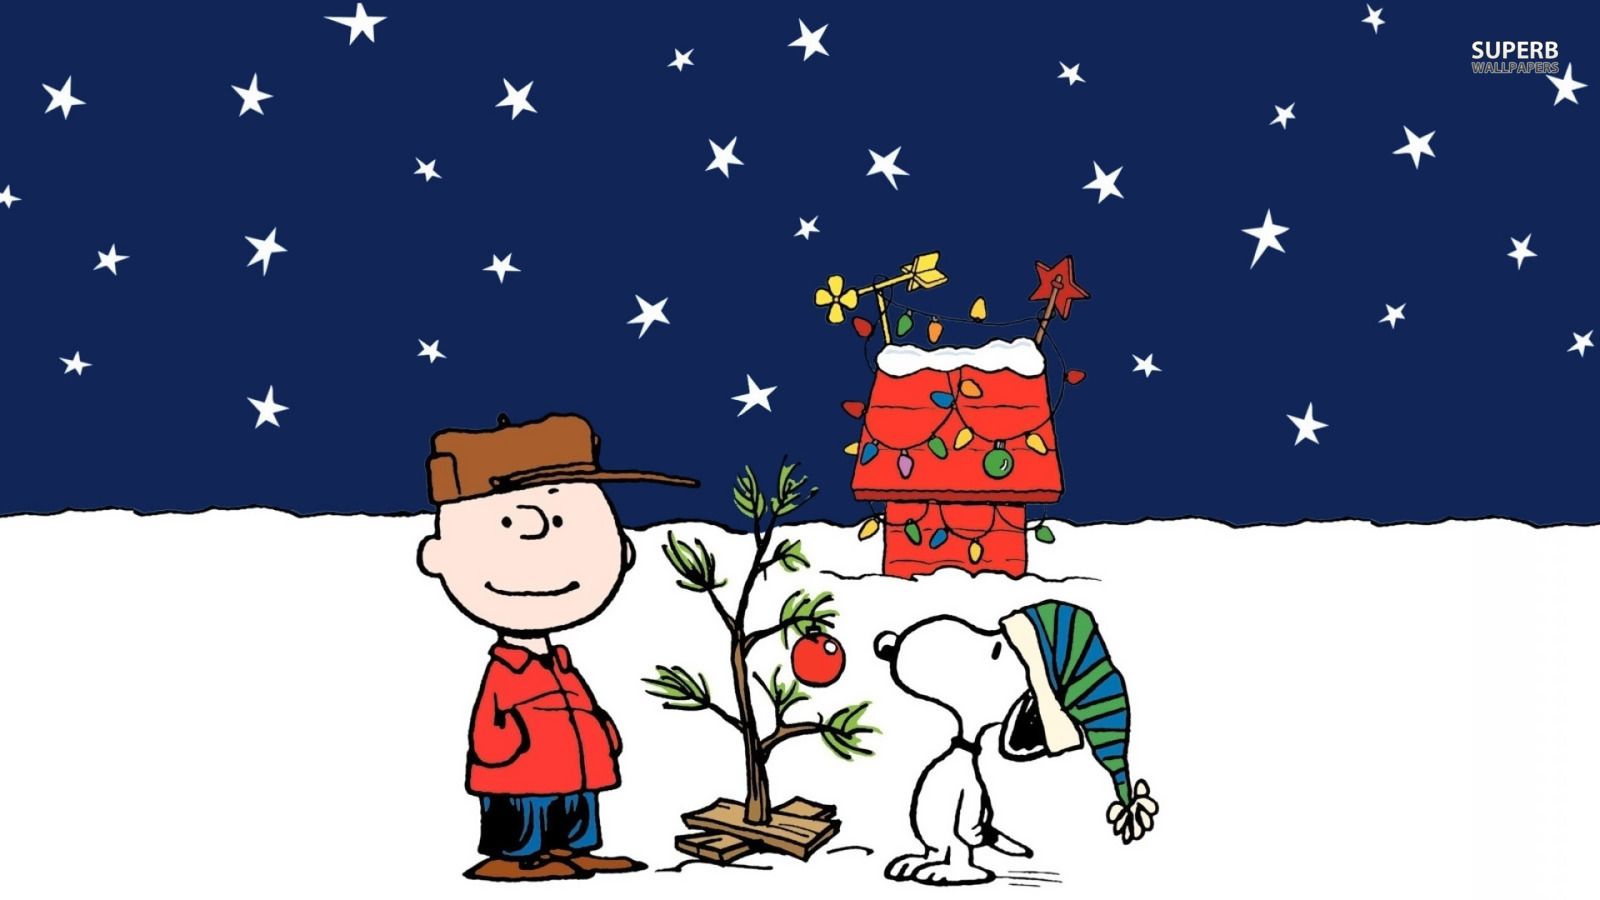 A Charlie Brown Christmas - Peanuts Wallpaper (38672257) - Fanpop